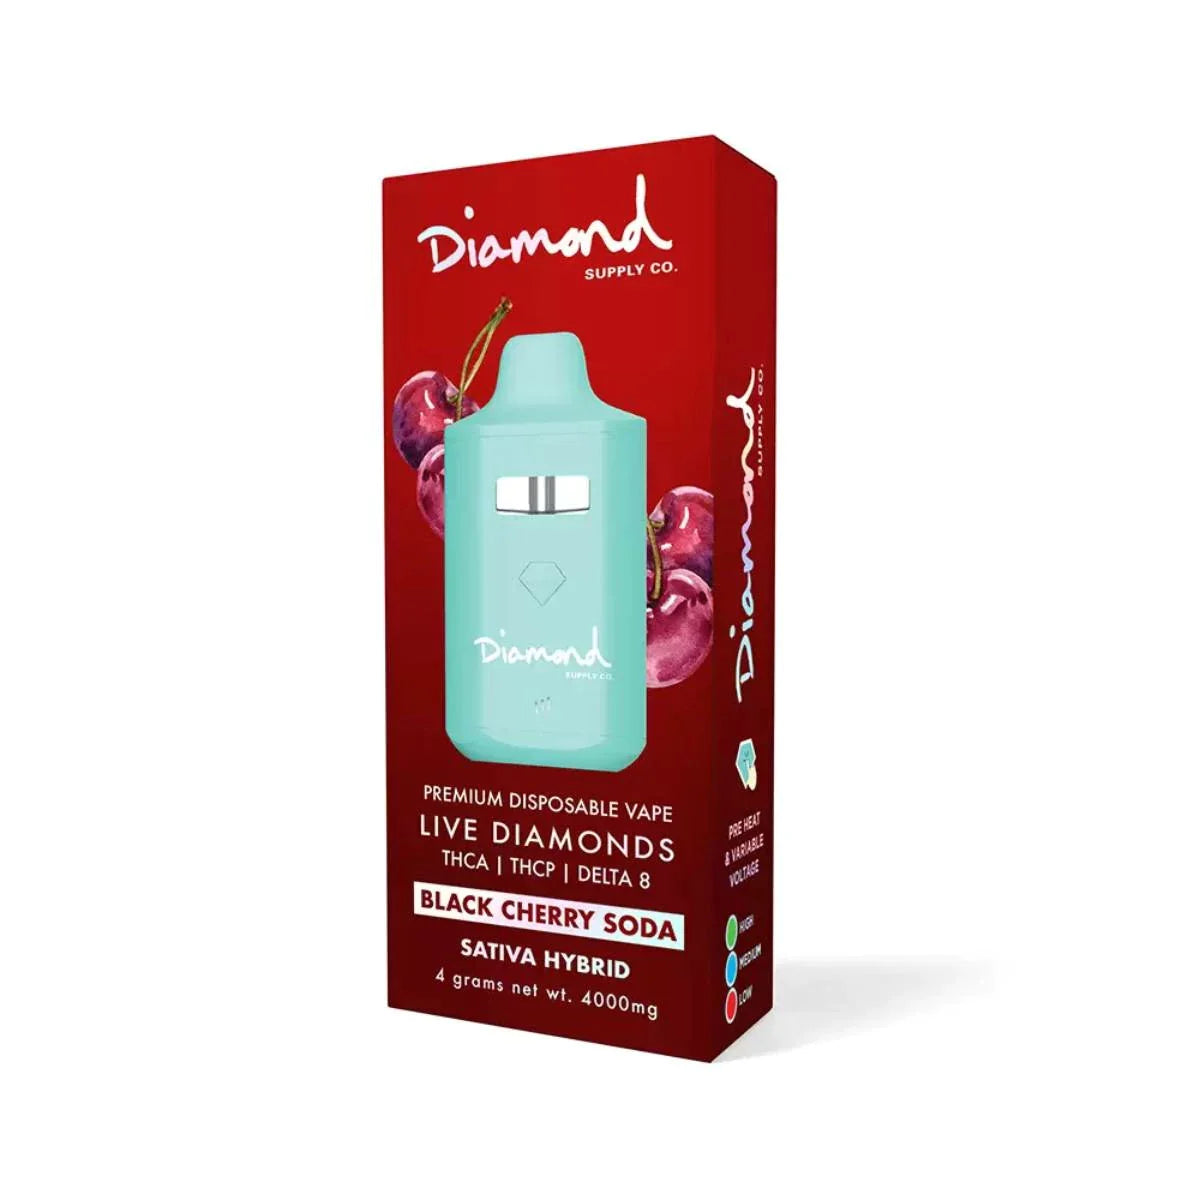 Urb x Diamond Supply Co. Live Diamonds Premium Disposable Vapes 4g Best Price